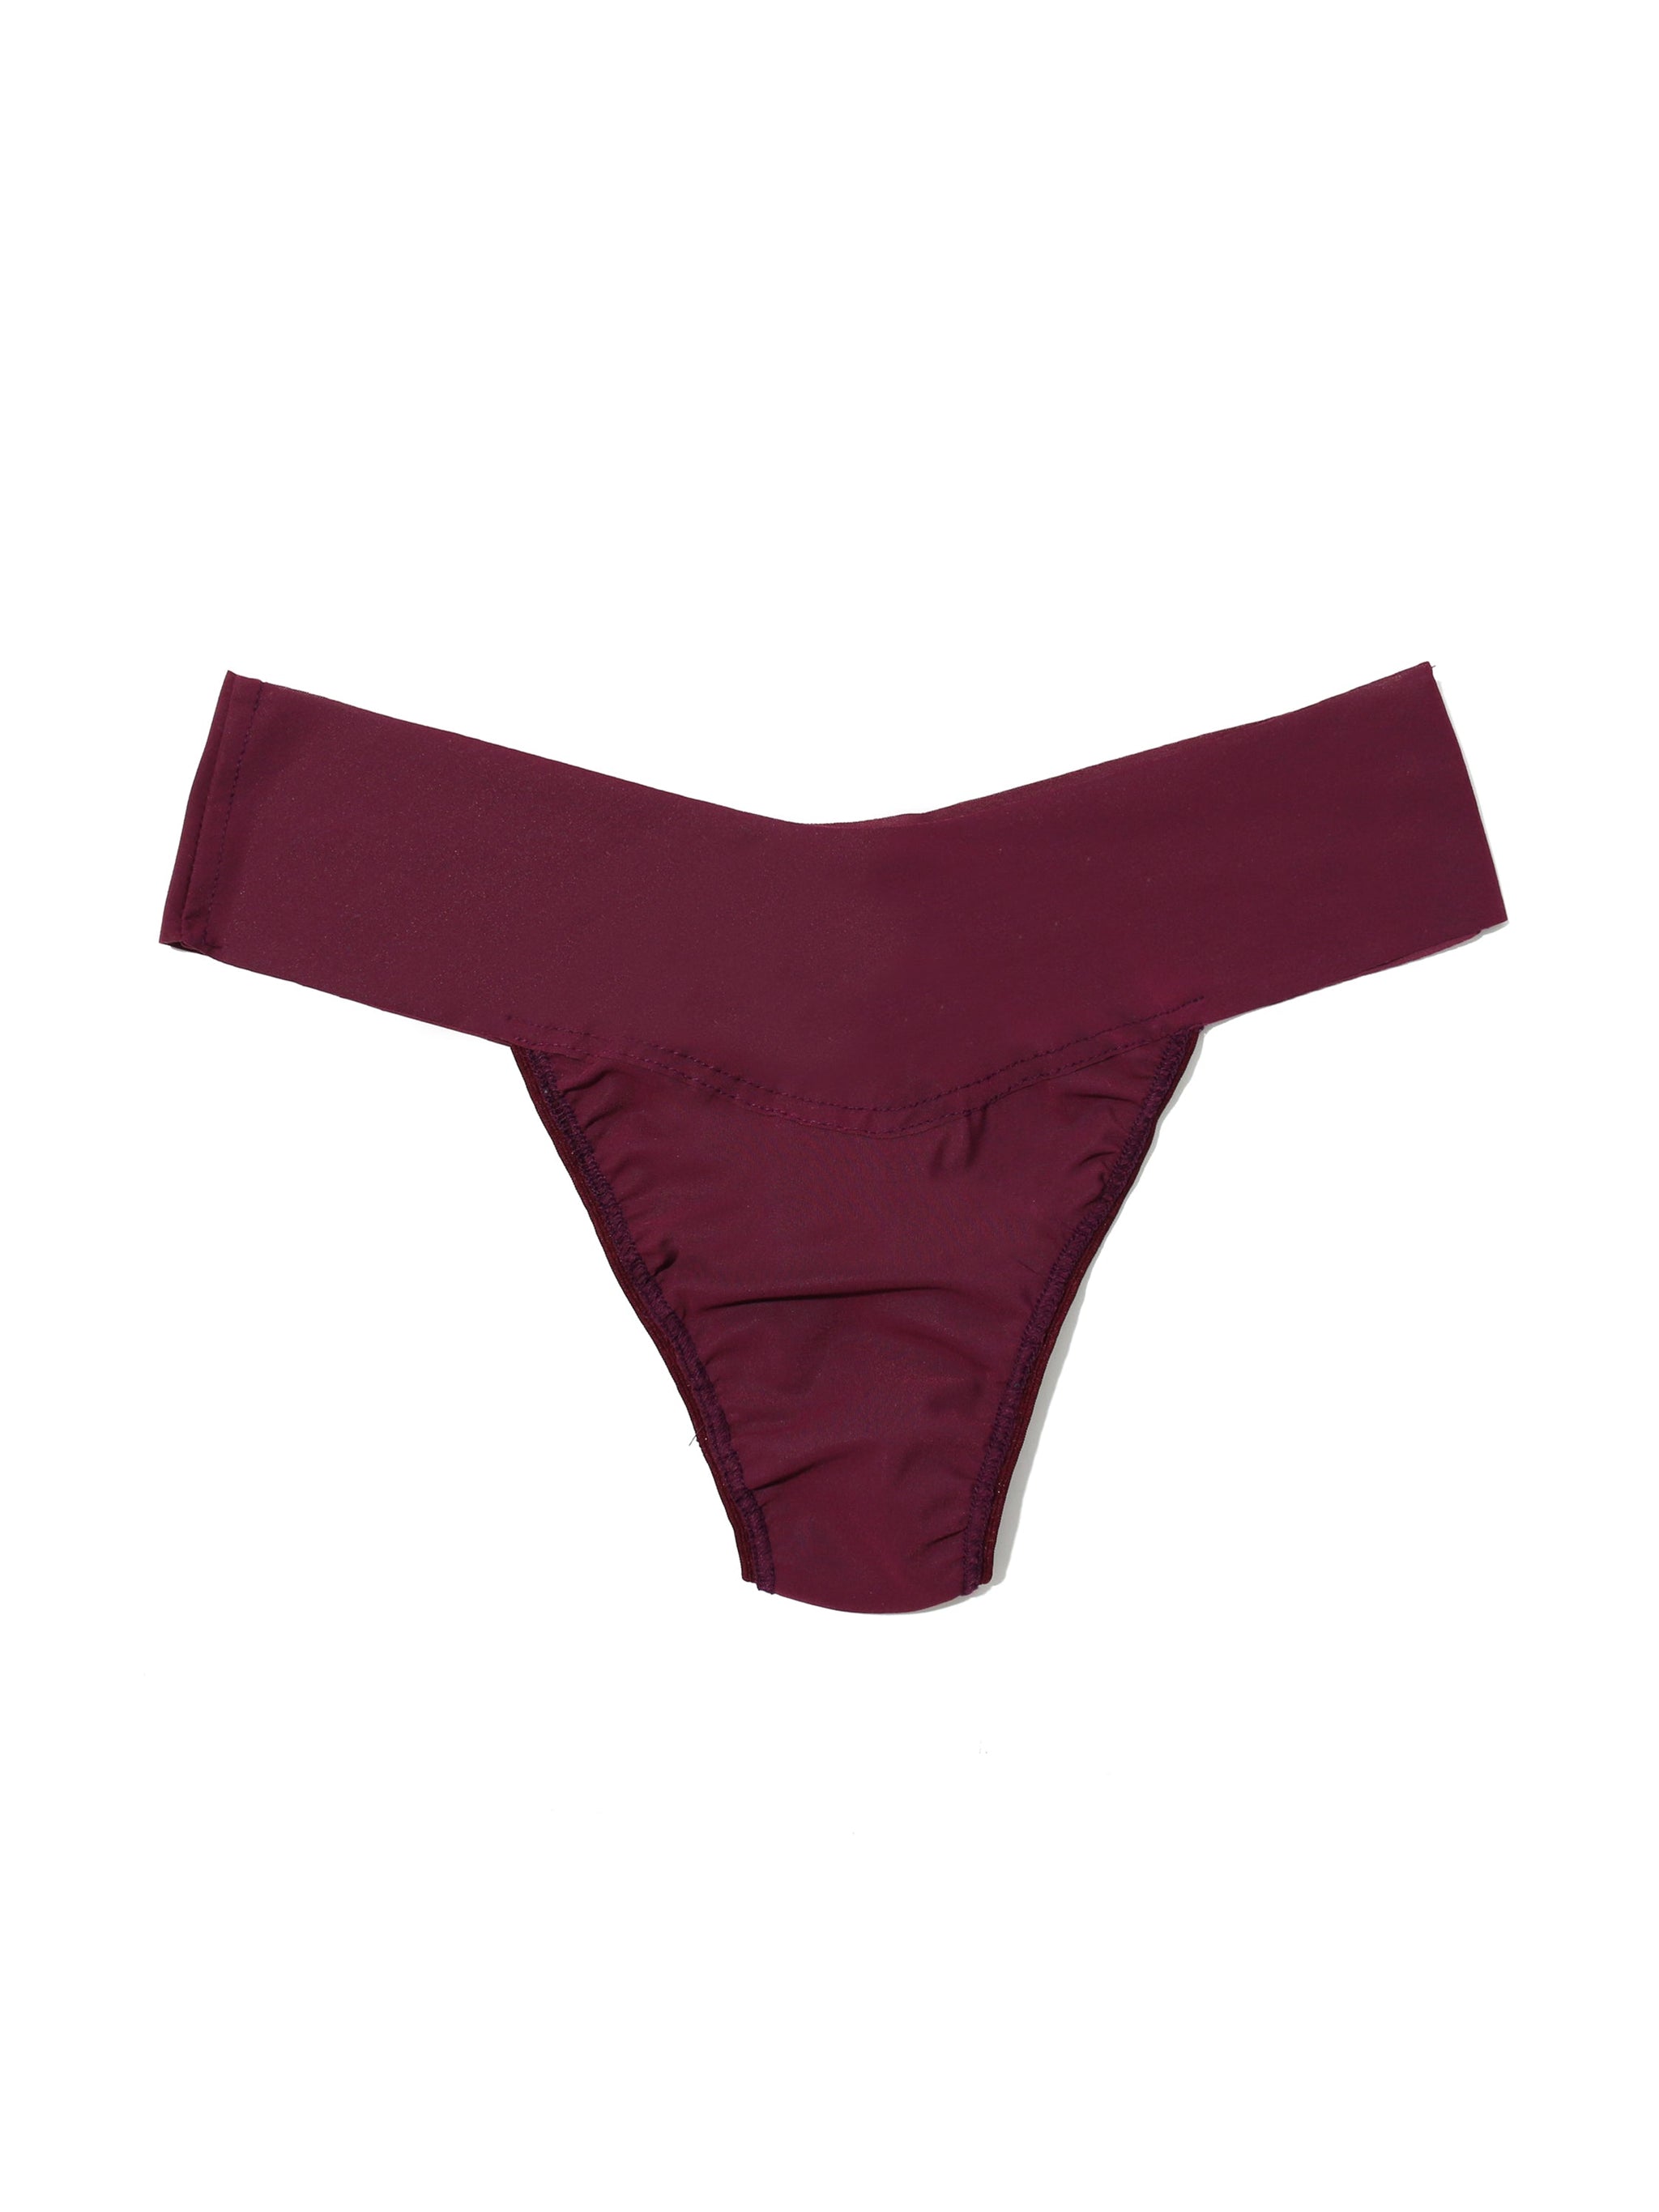 moonlight elves Panties For Women Lace Thongs Jujube Red Underwear